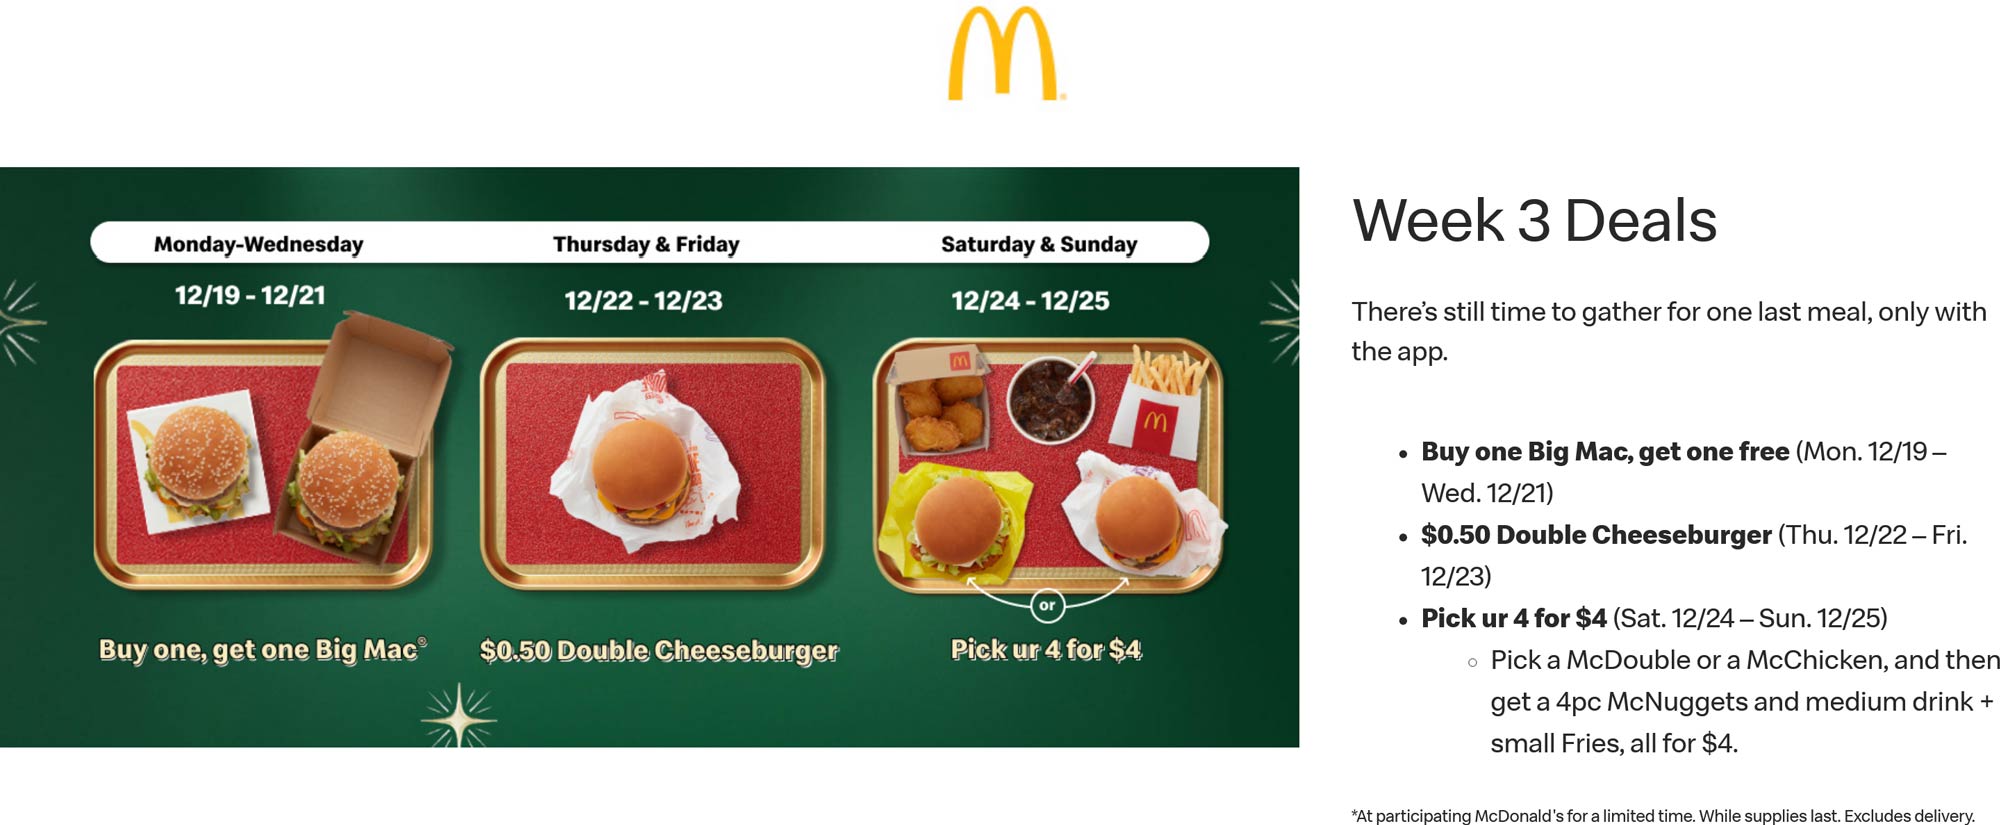 McDonalds restaurants Coupon  .50 cent double cheeseburger at McDonalds #mcdonalds 